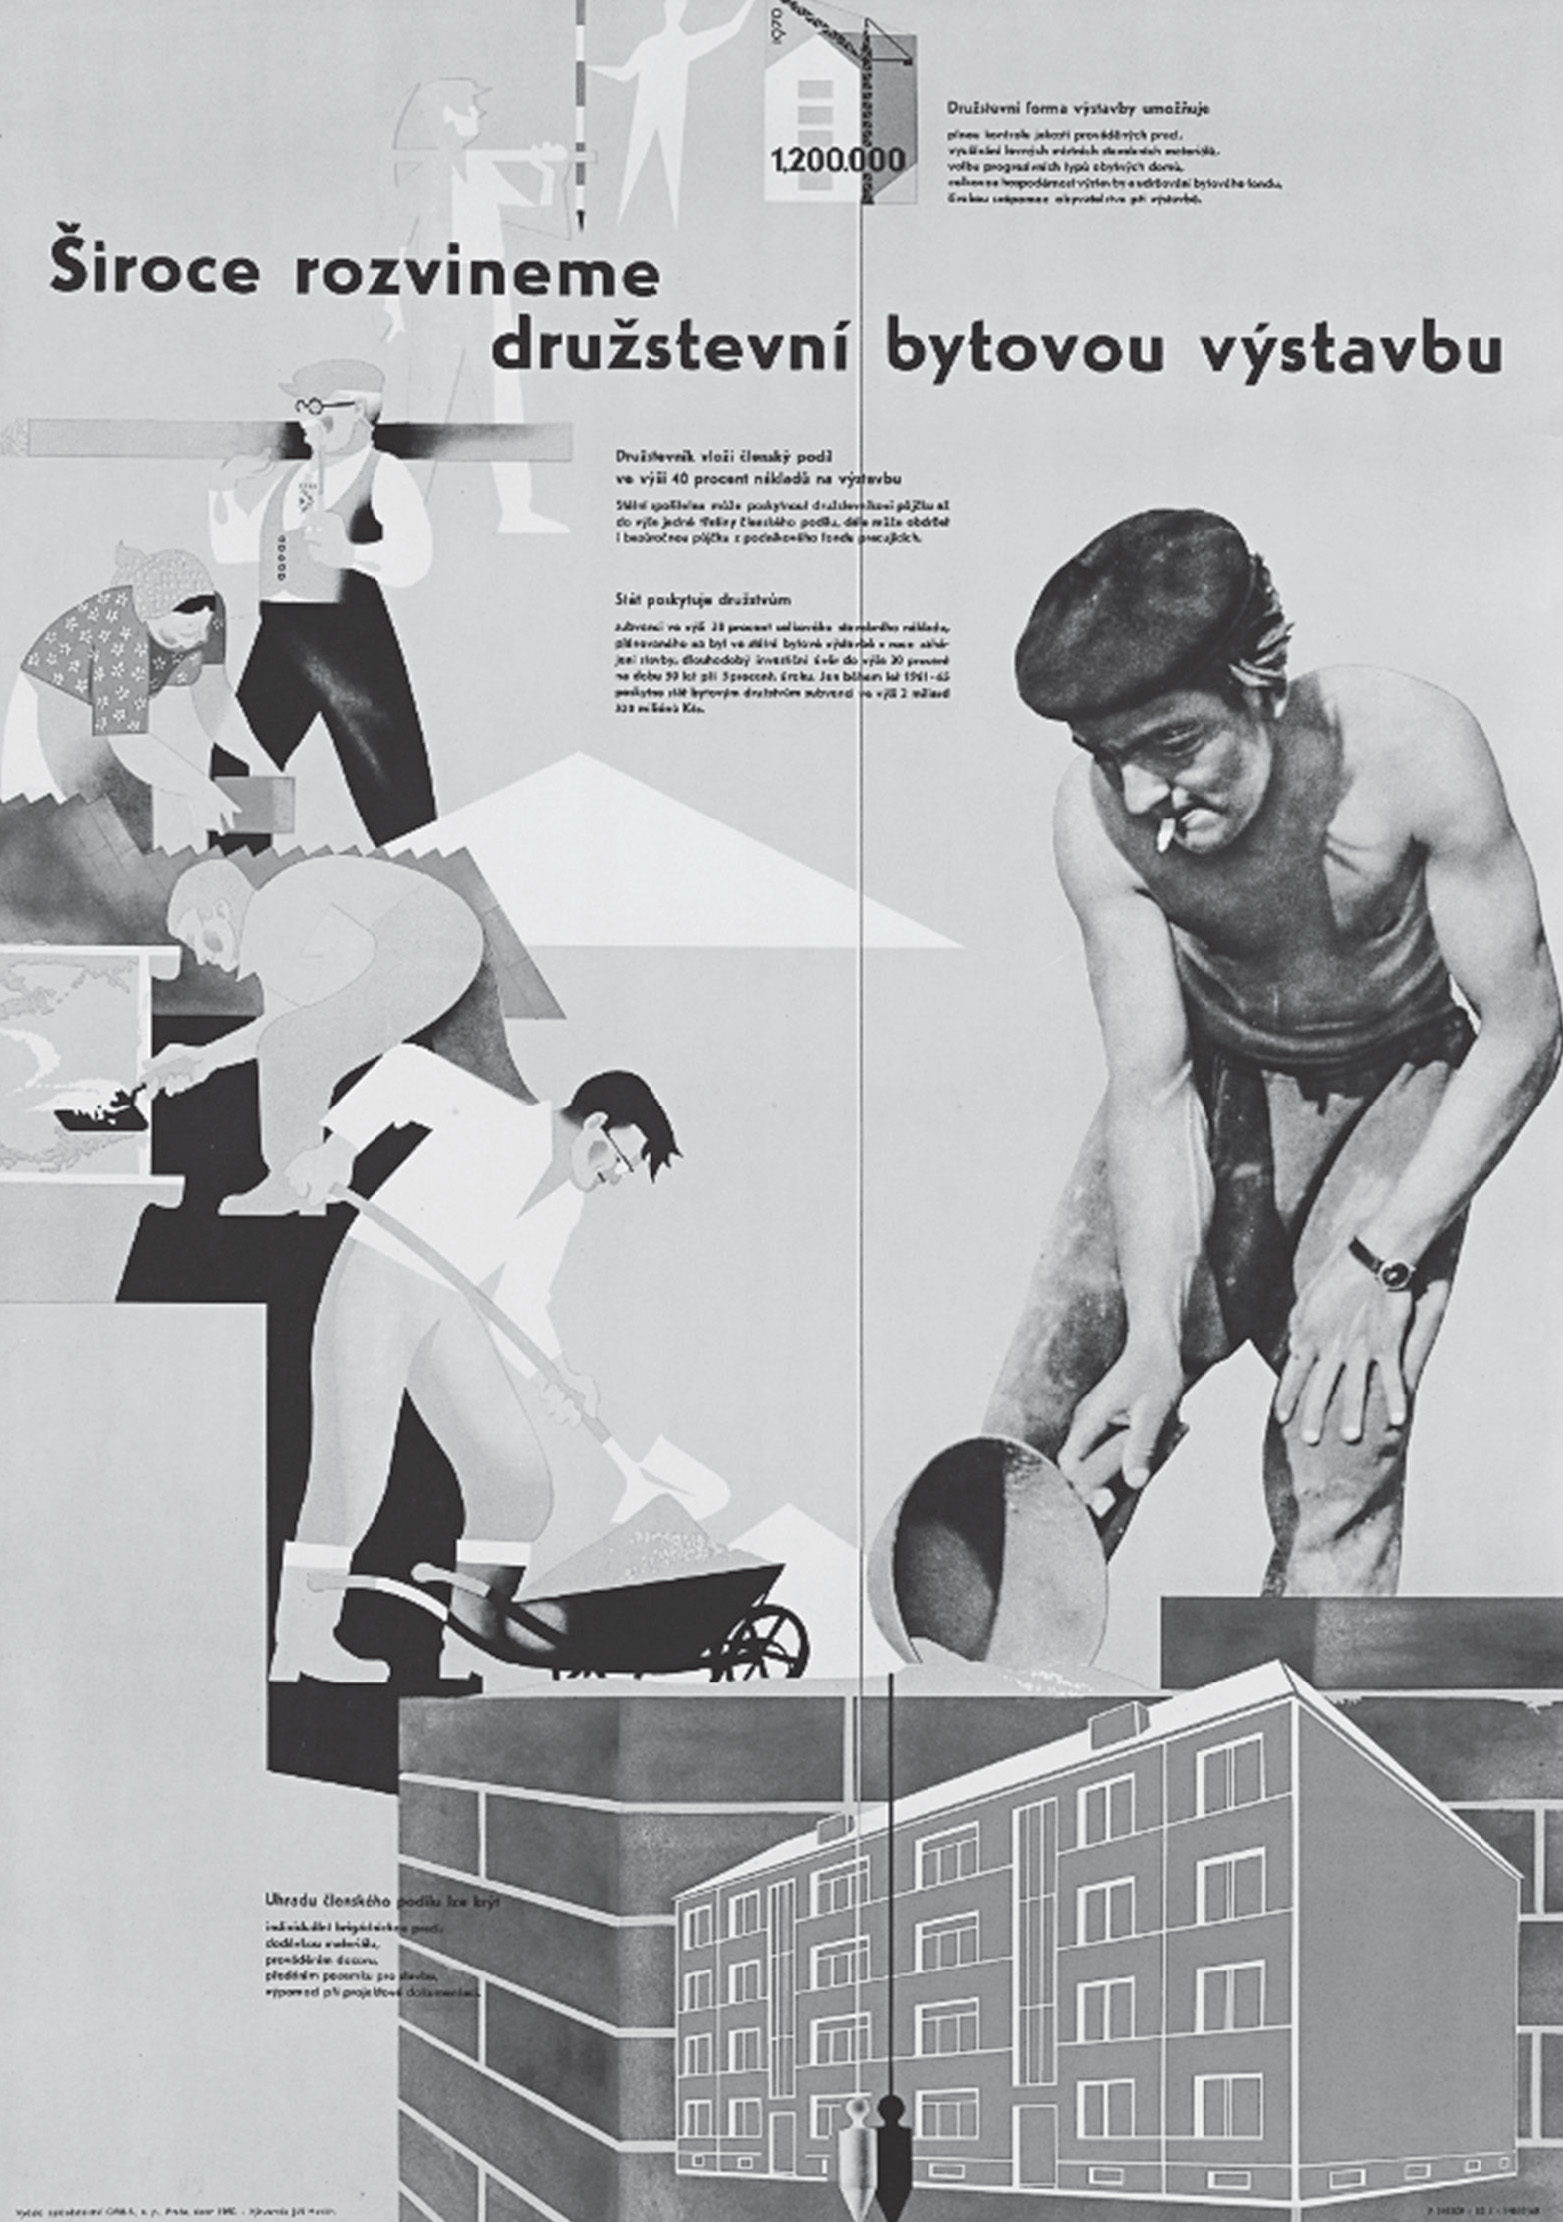 On Cooperative Housing in Socialist Czechoslovakia, 1959 – 1970